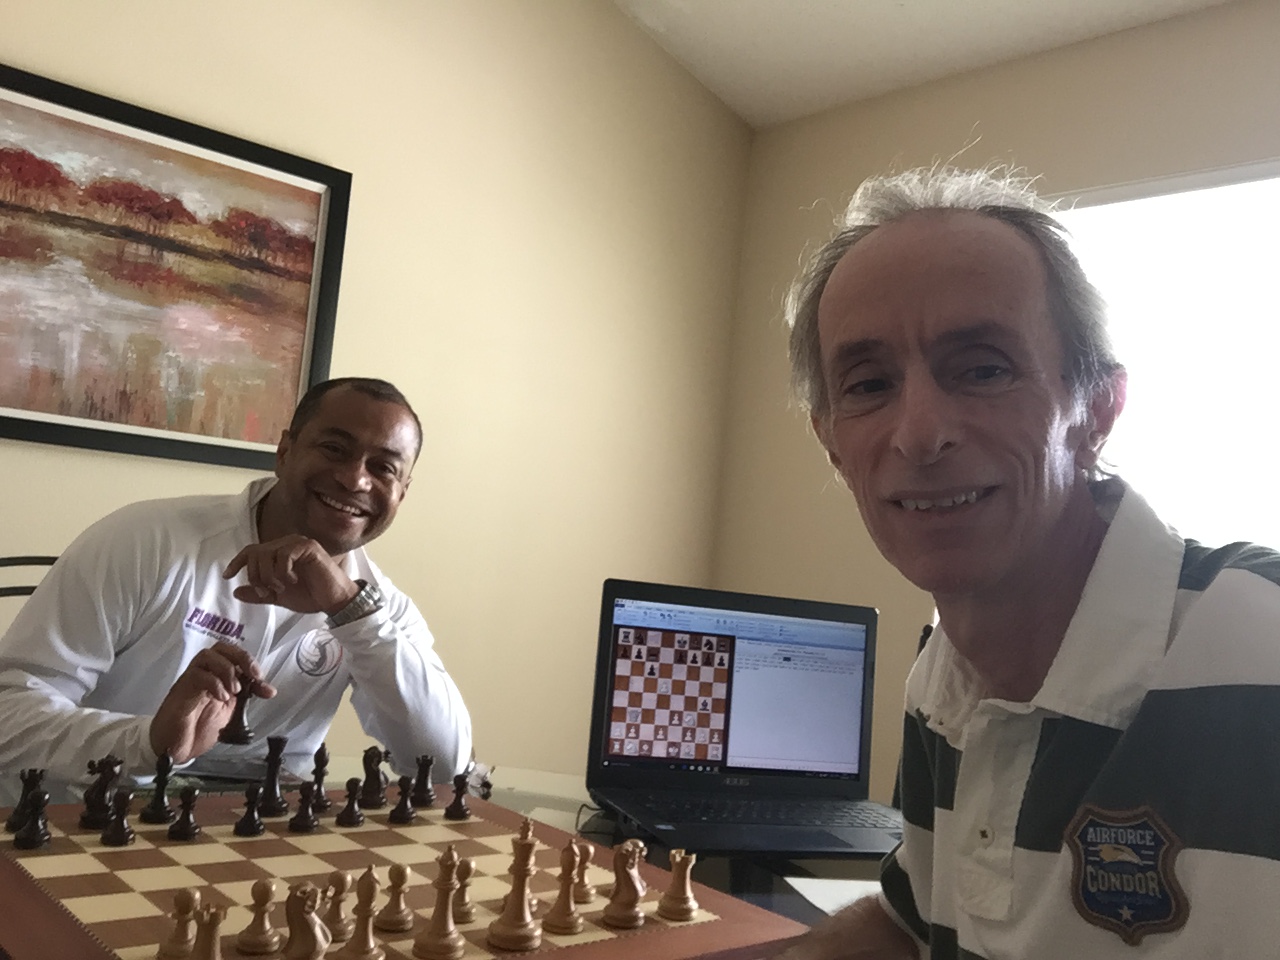 Chess Developments: The Pirc